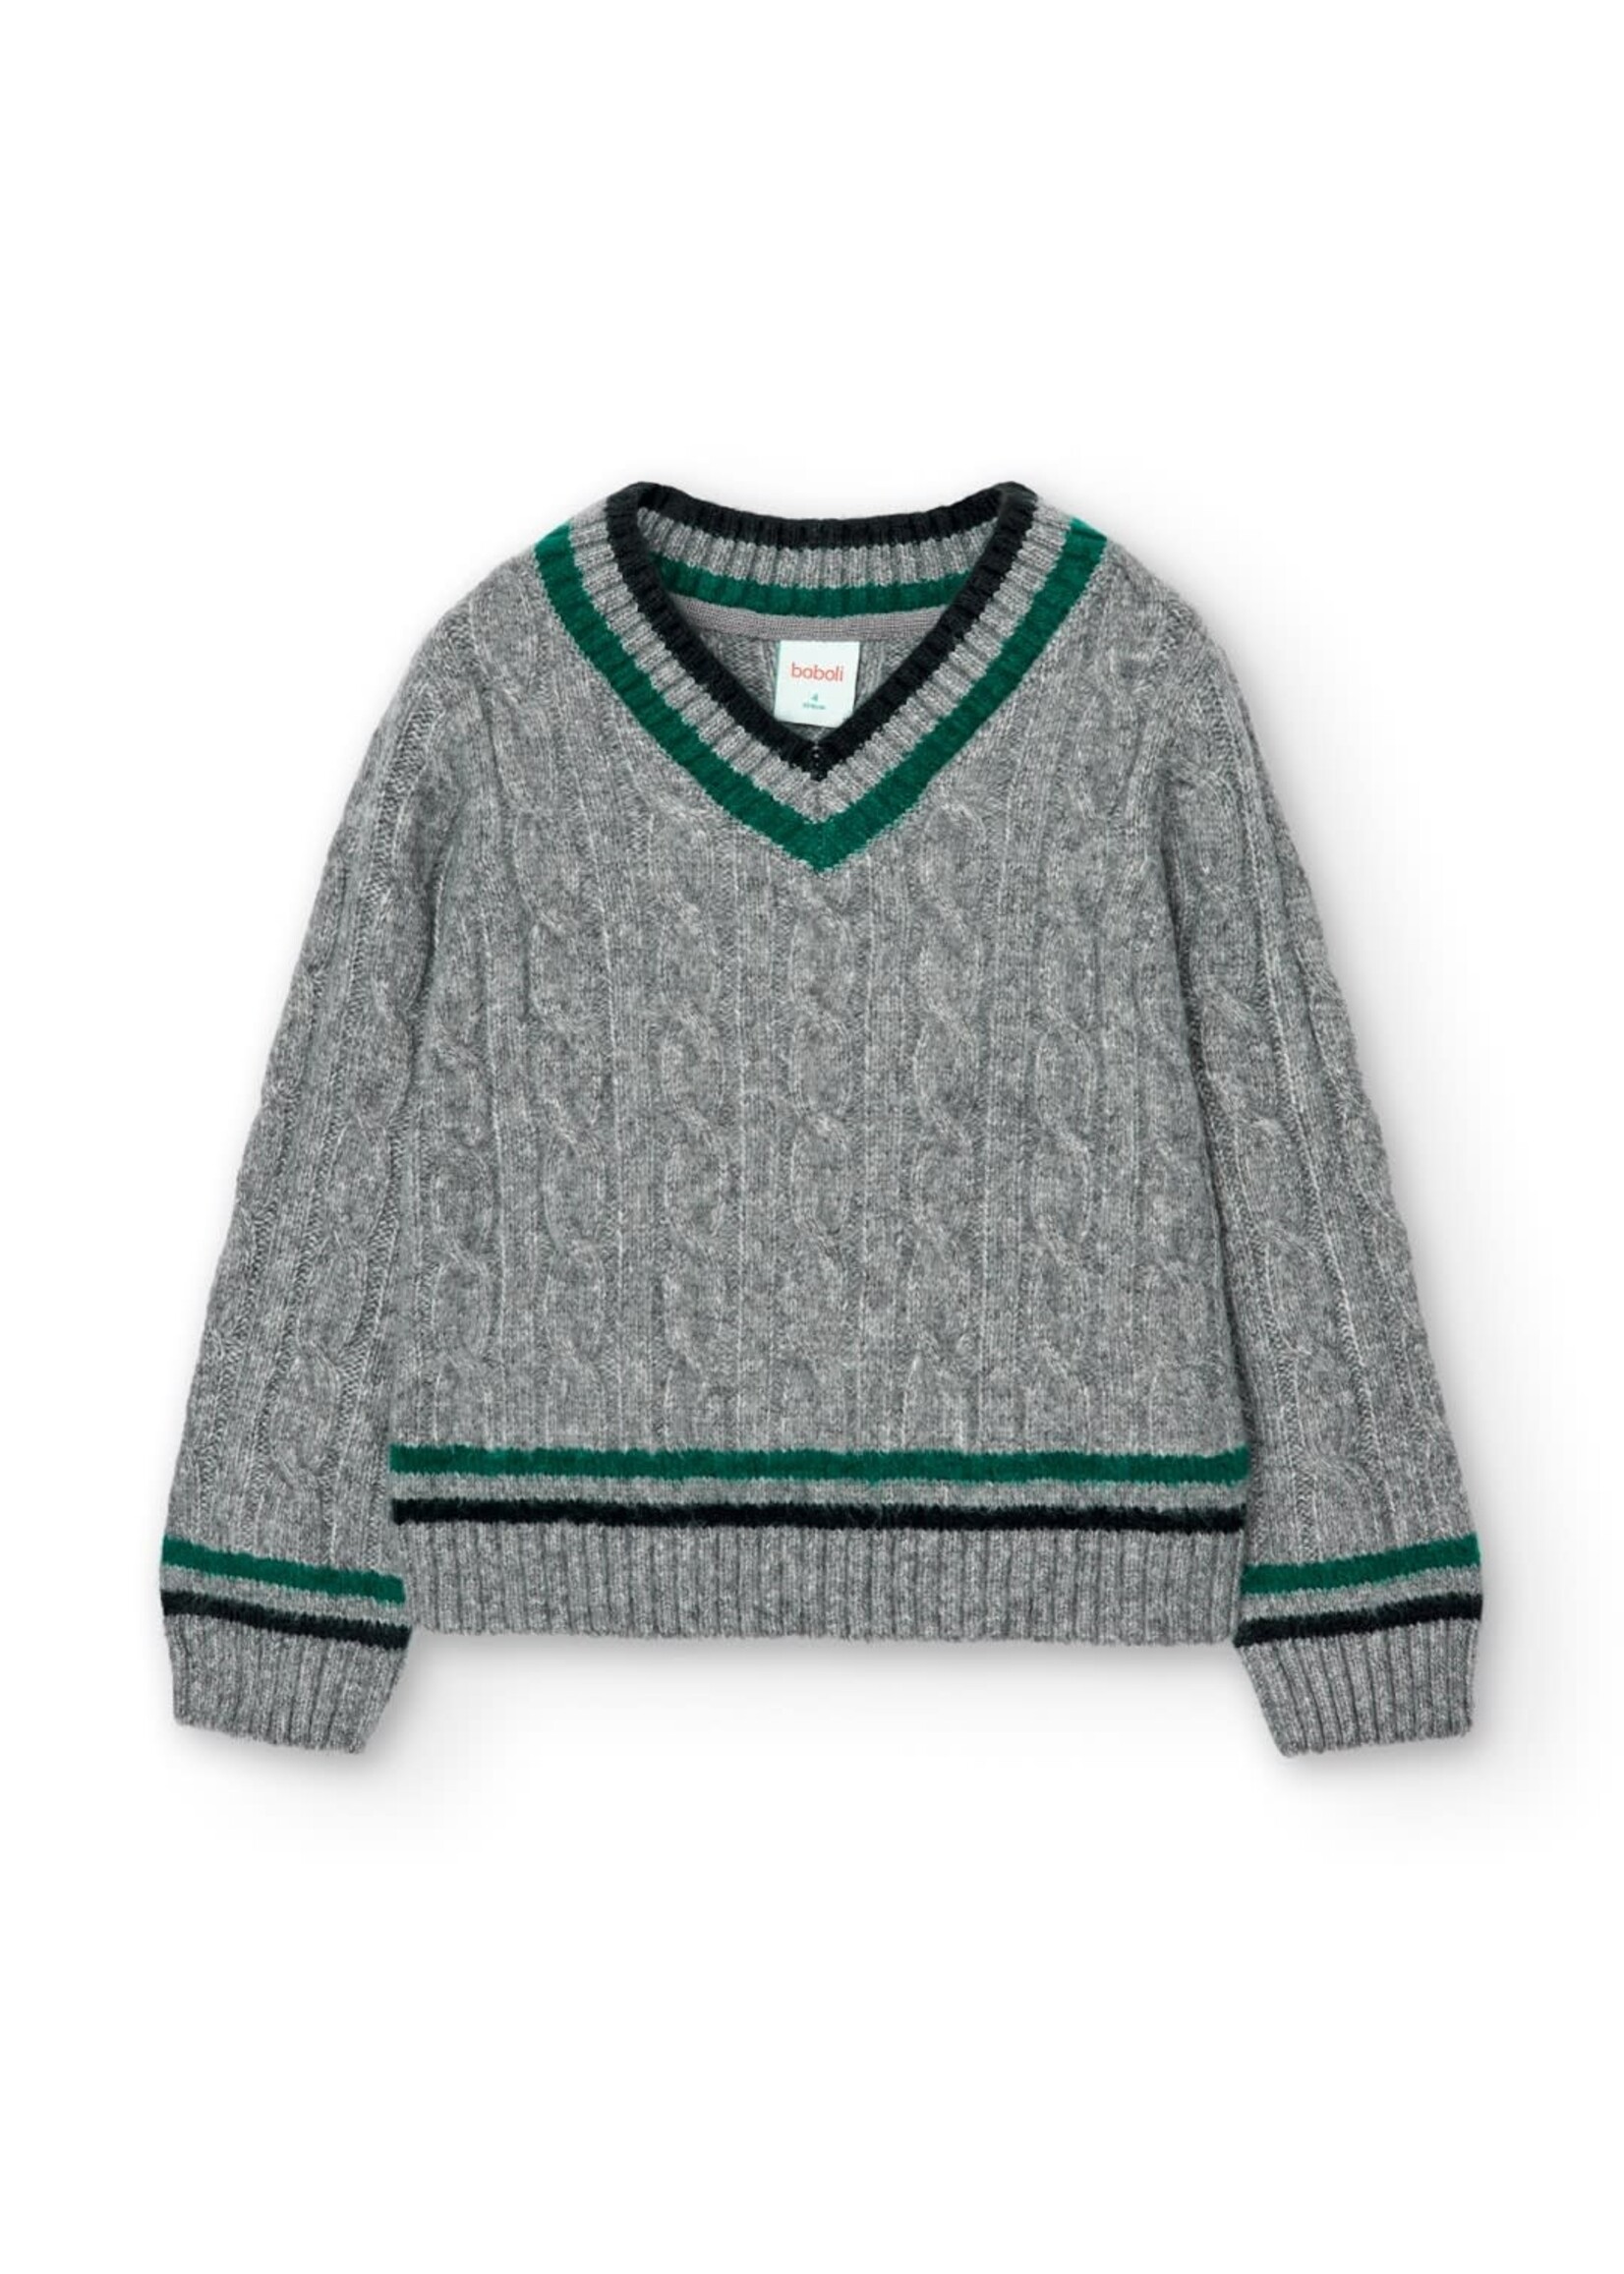 Boboli Boboli Knitwear pullover v-neck for boy grey 737311